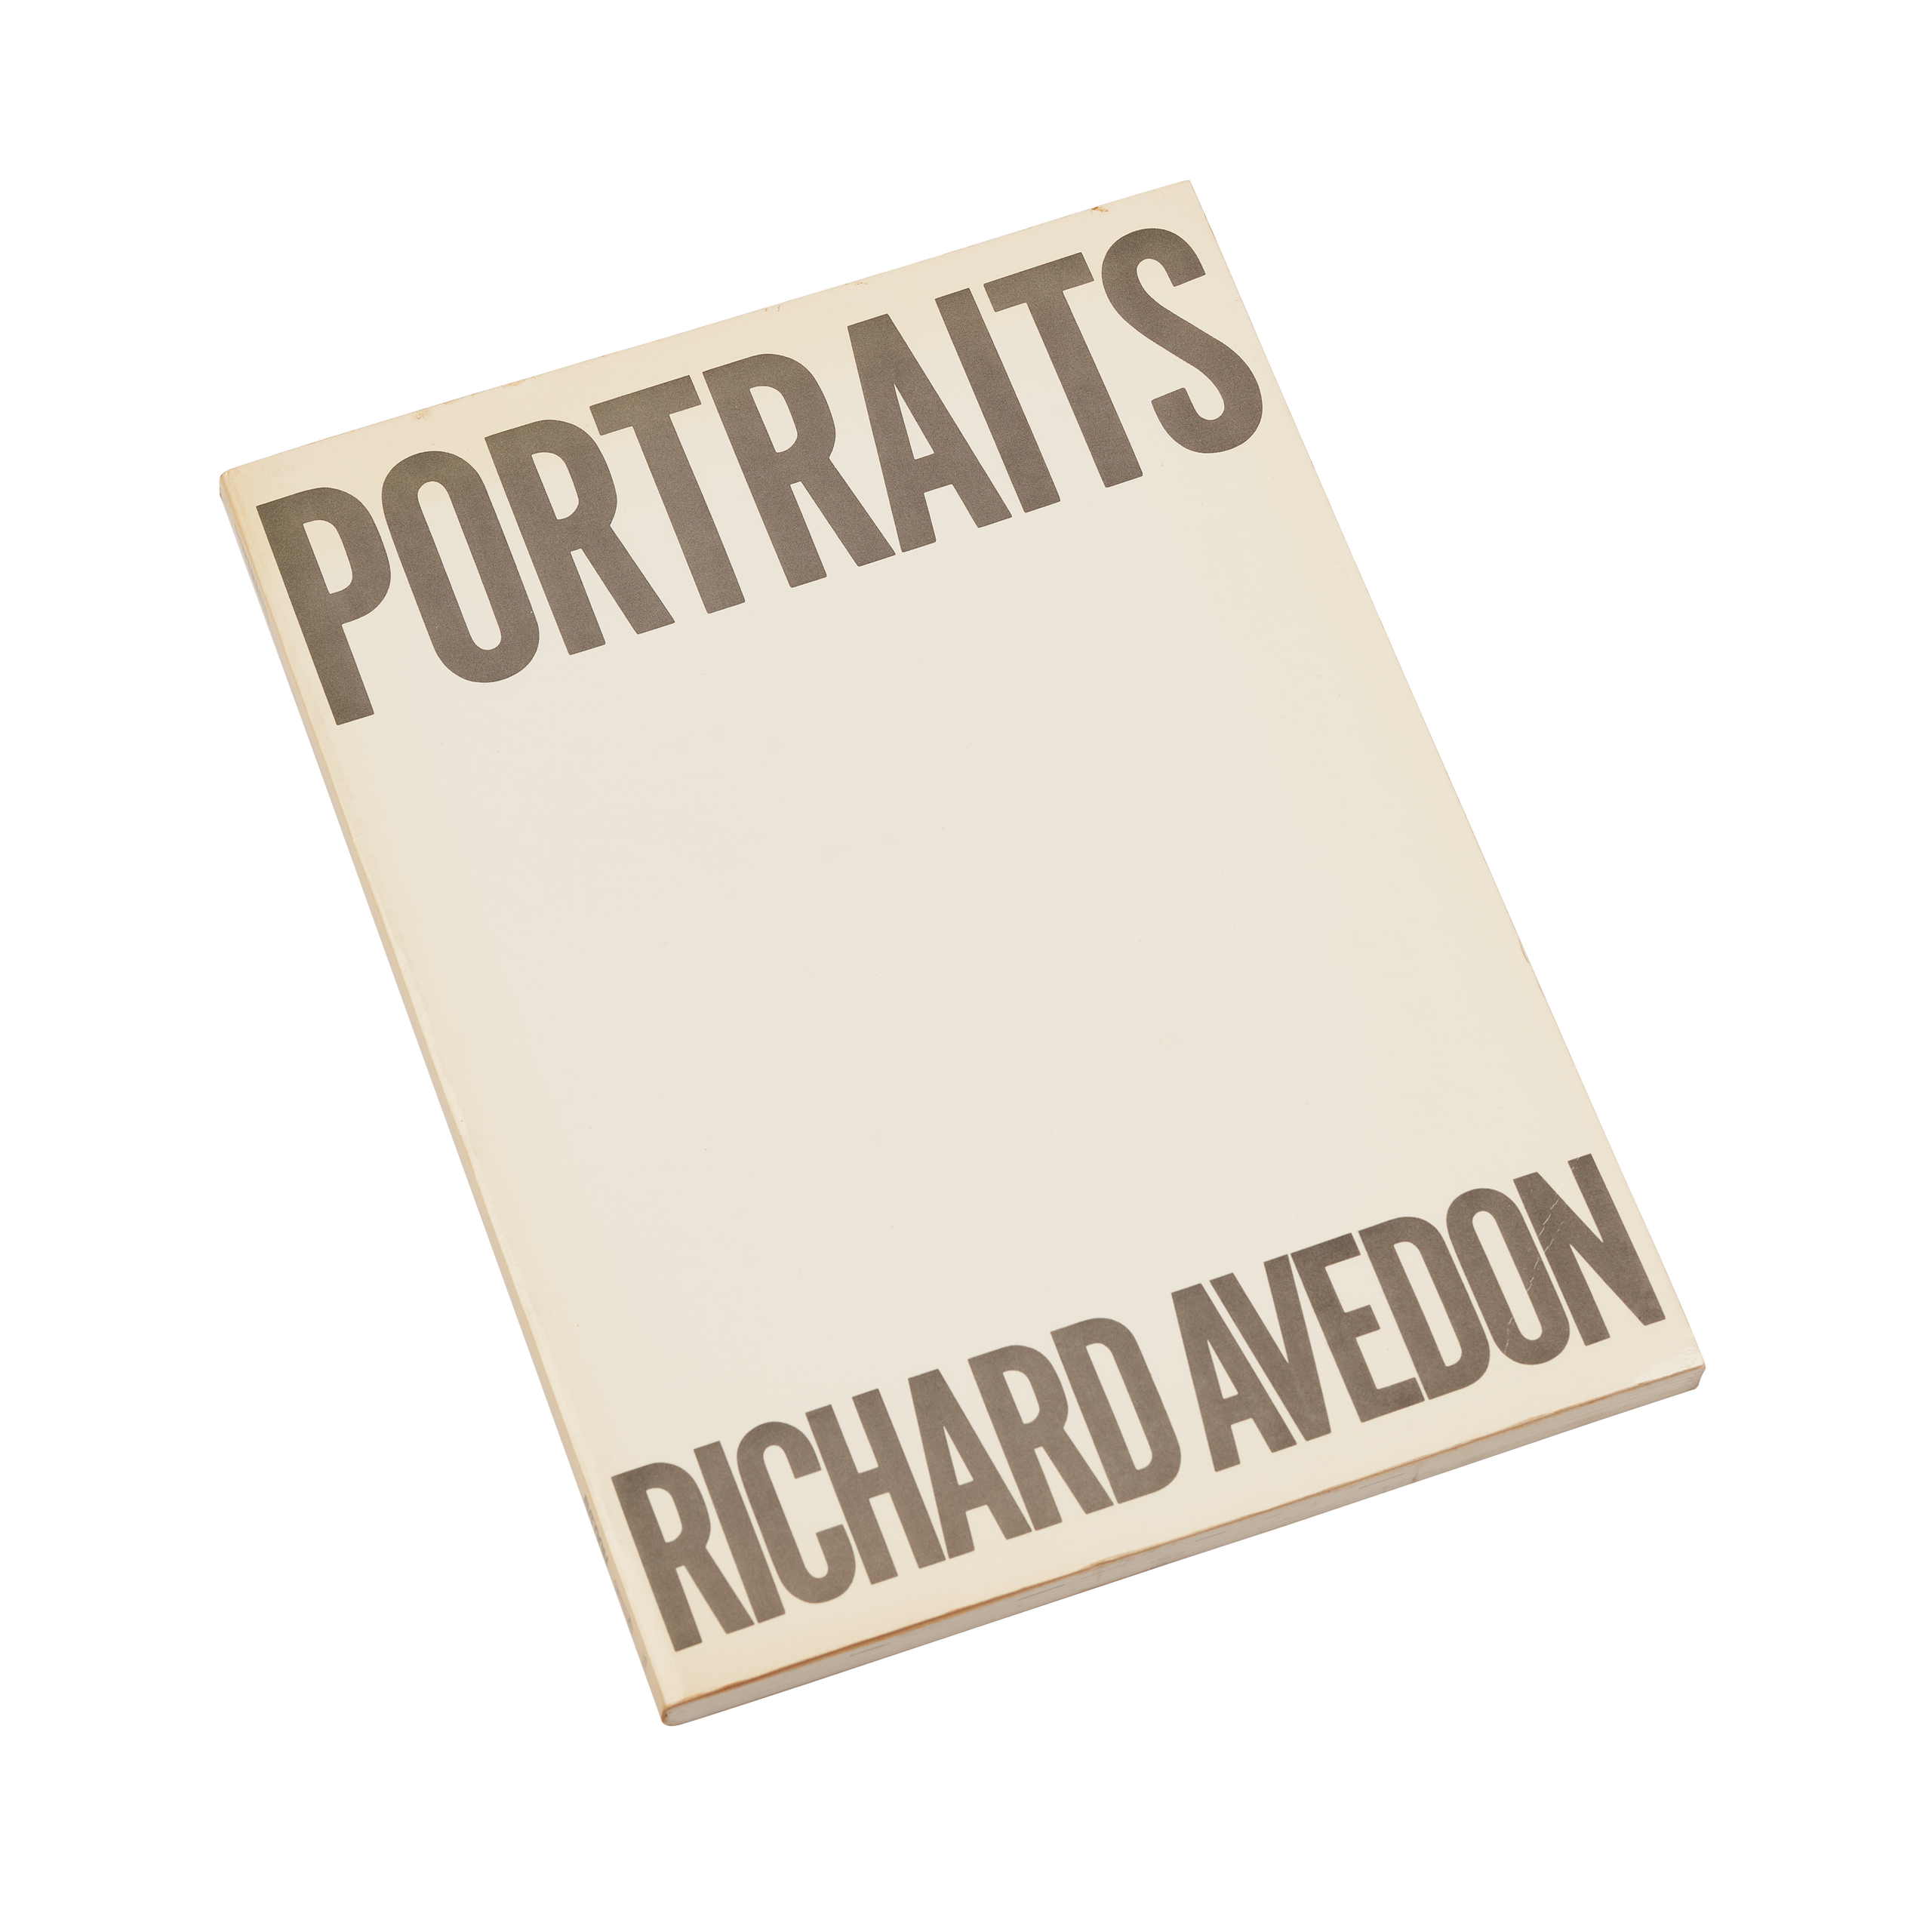 Portraits by Richard Avedon